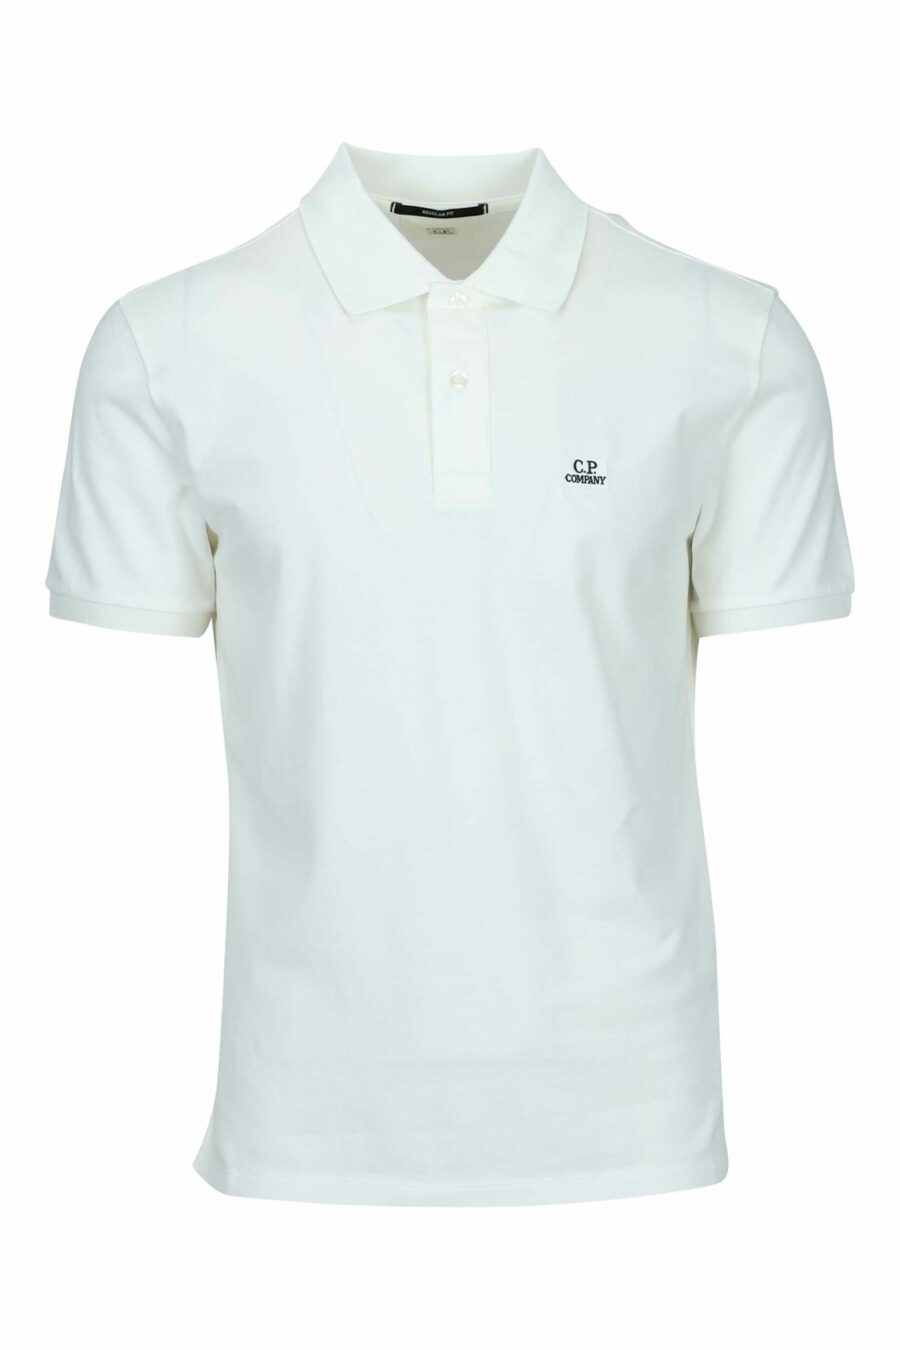 Weißes Poloshirt mit Mini-Logoaufnäher "cp" - 7620943728392 skaliert